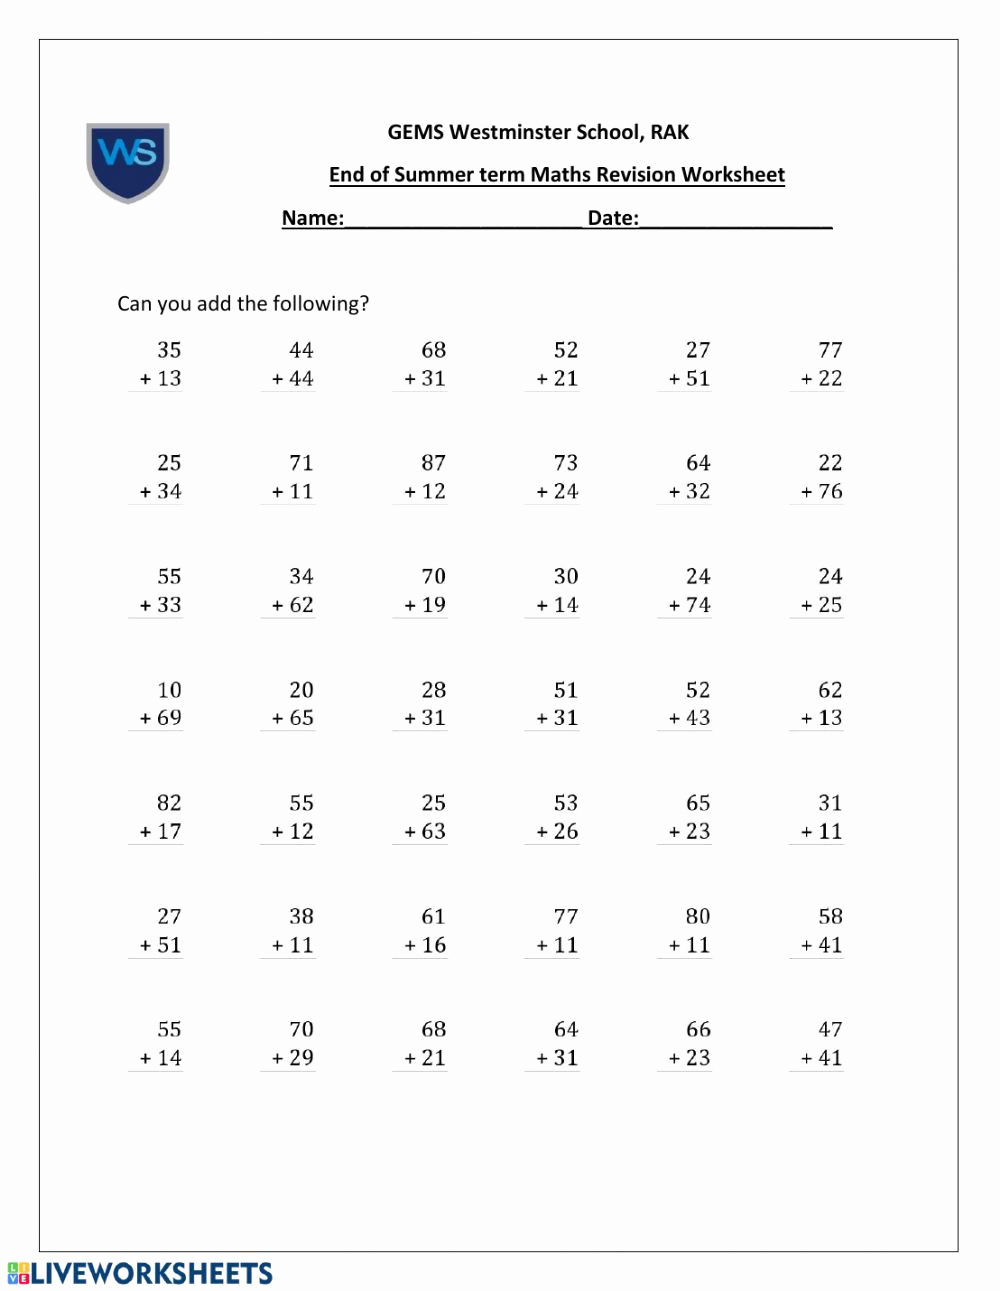 Russian Math Worksheets Elegant Russian School Math Worksheets Simple Template Design